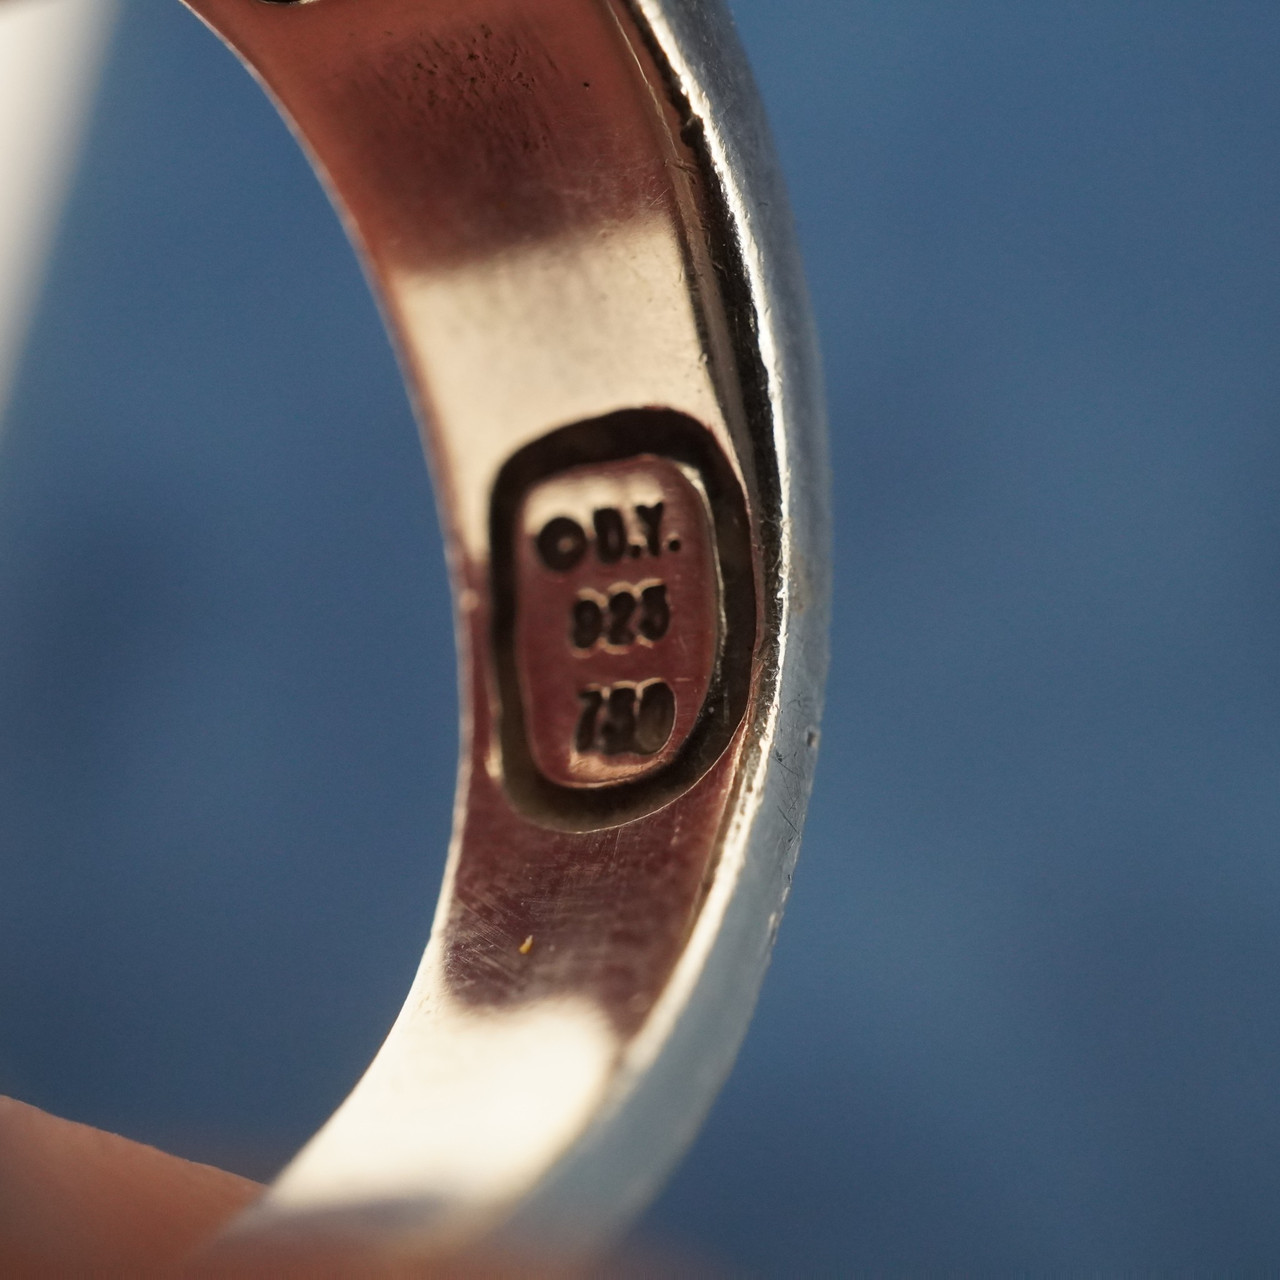 Louis Vuitton Silver Monogram Ring - Size 7.5